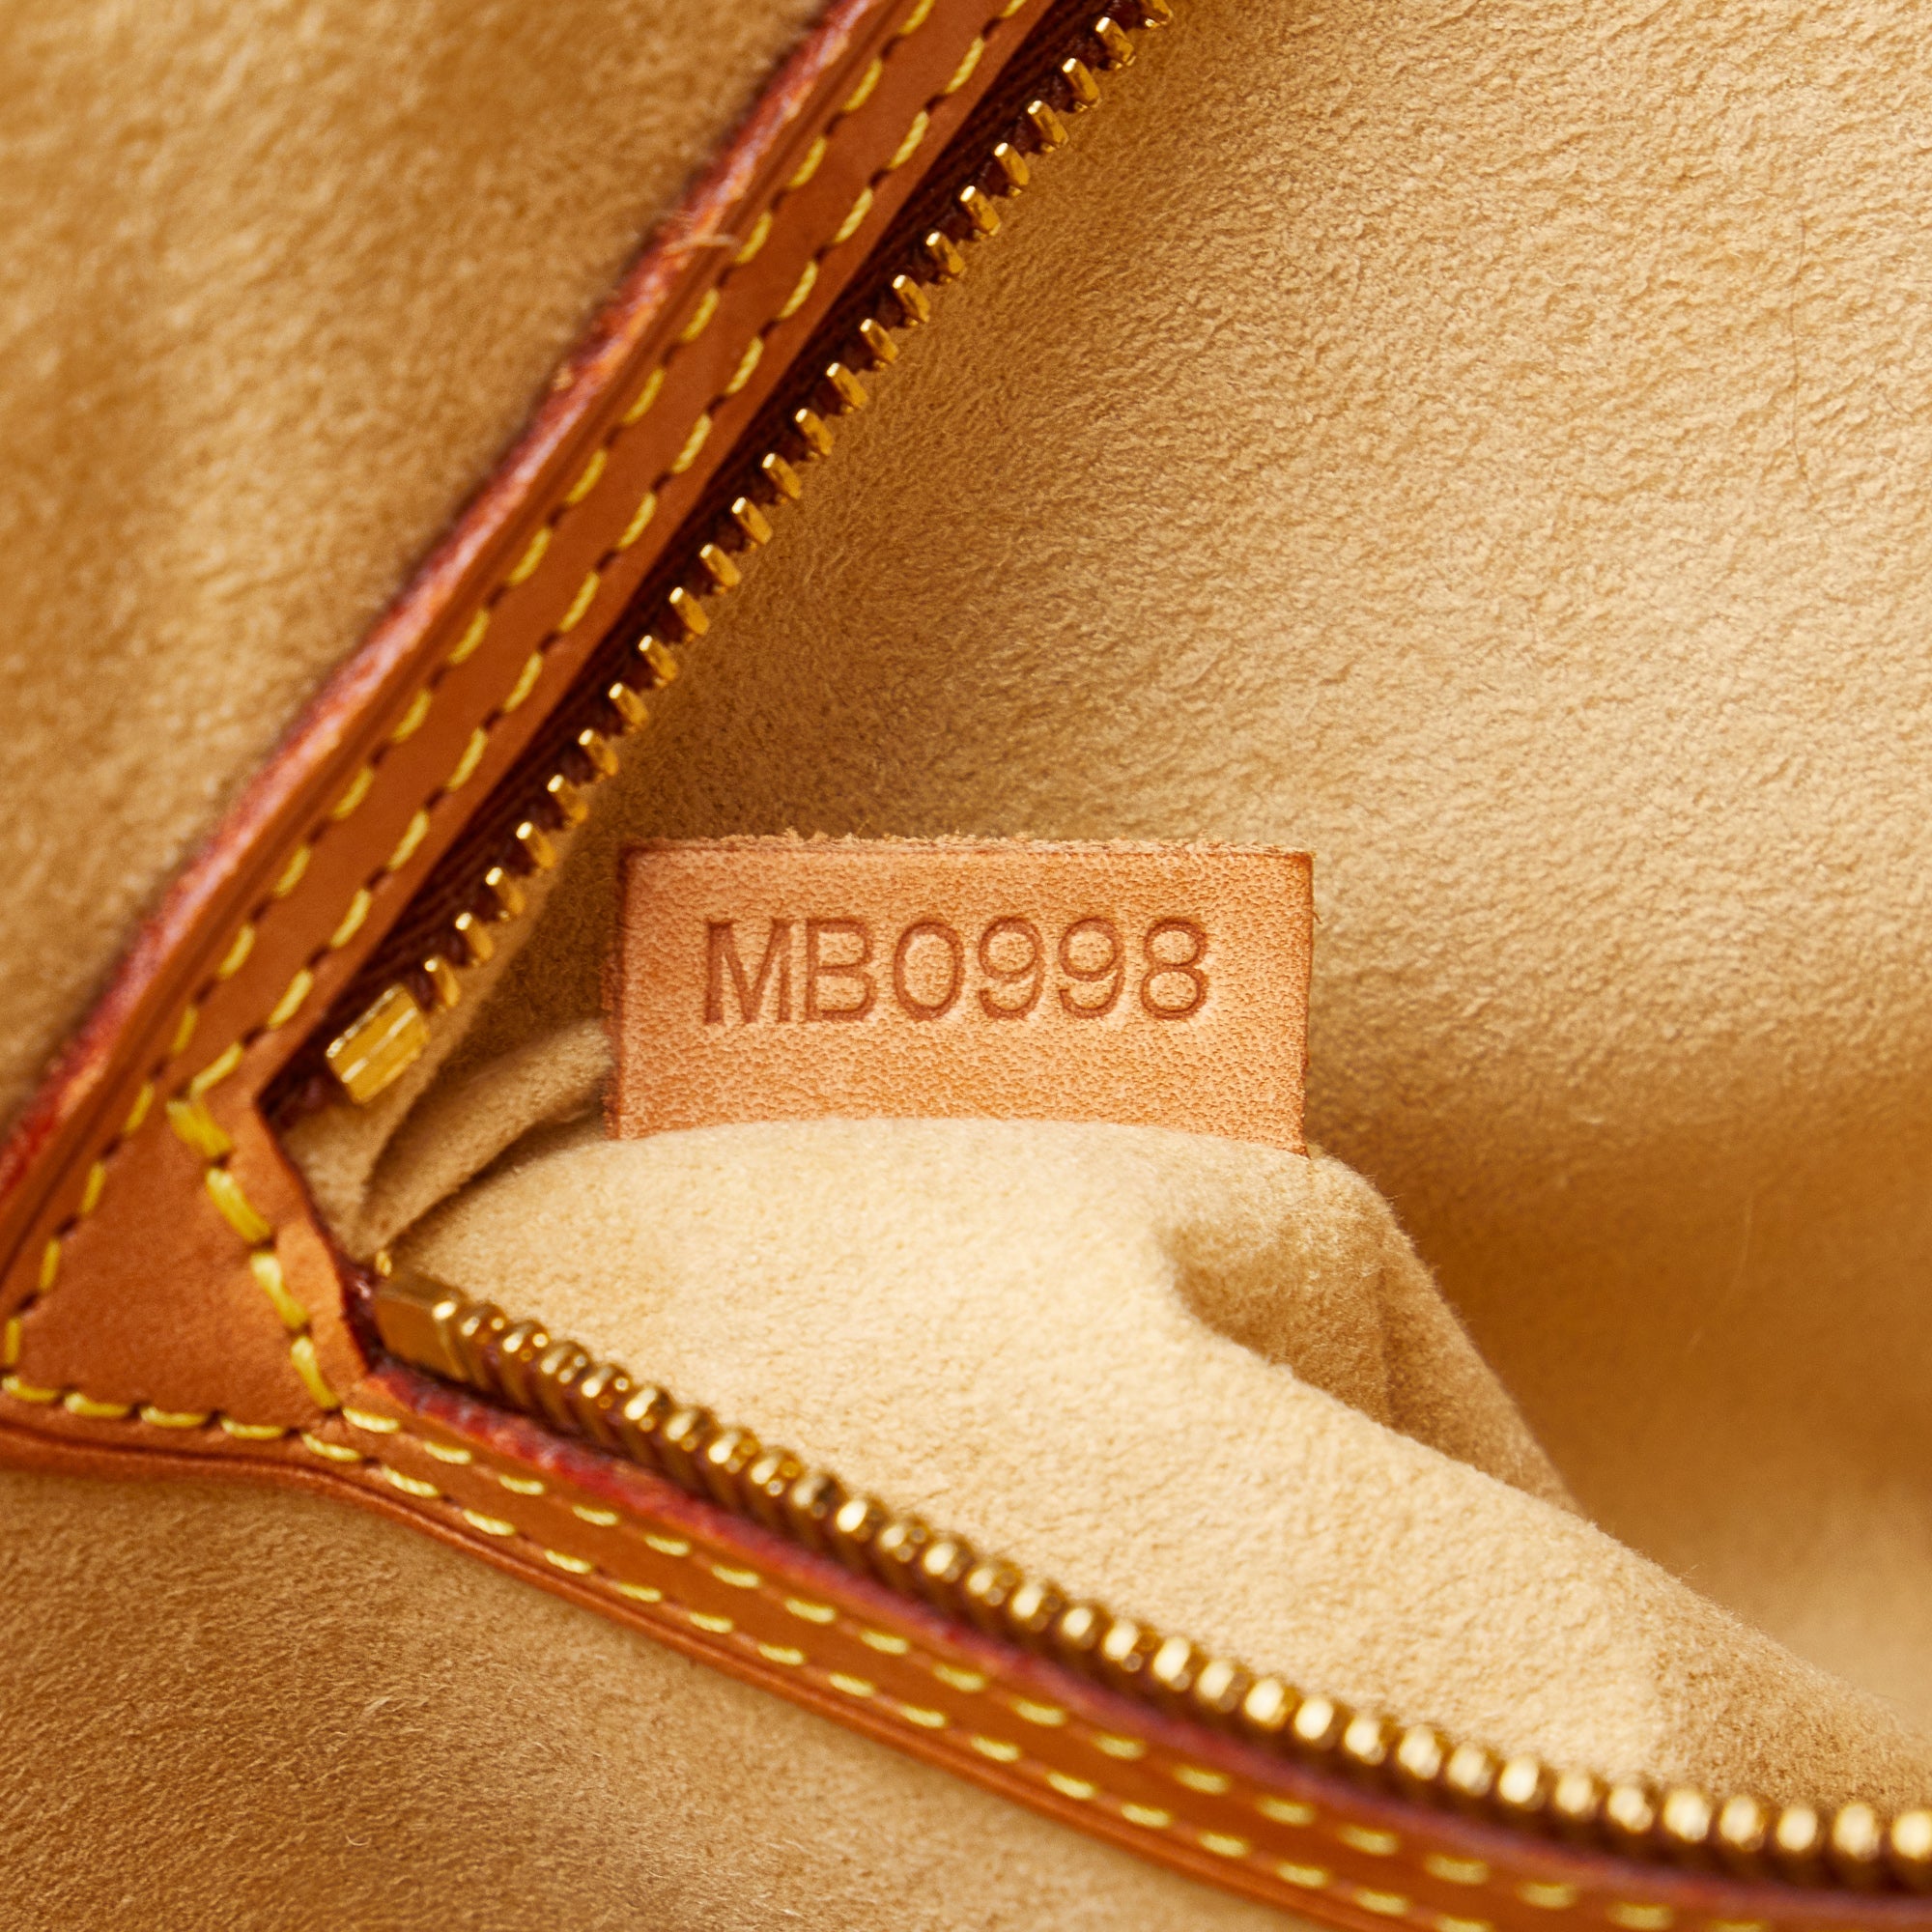 Brown Louis Vuitton Monogram Babylone Shoulder Bag – Designer Revival